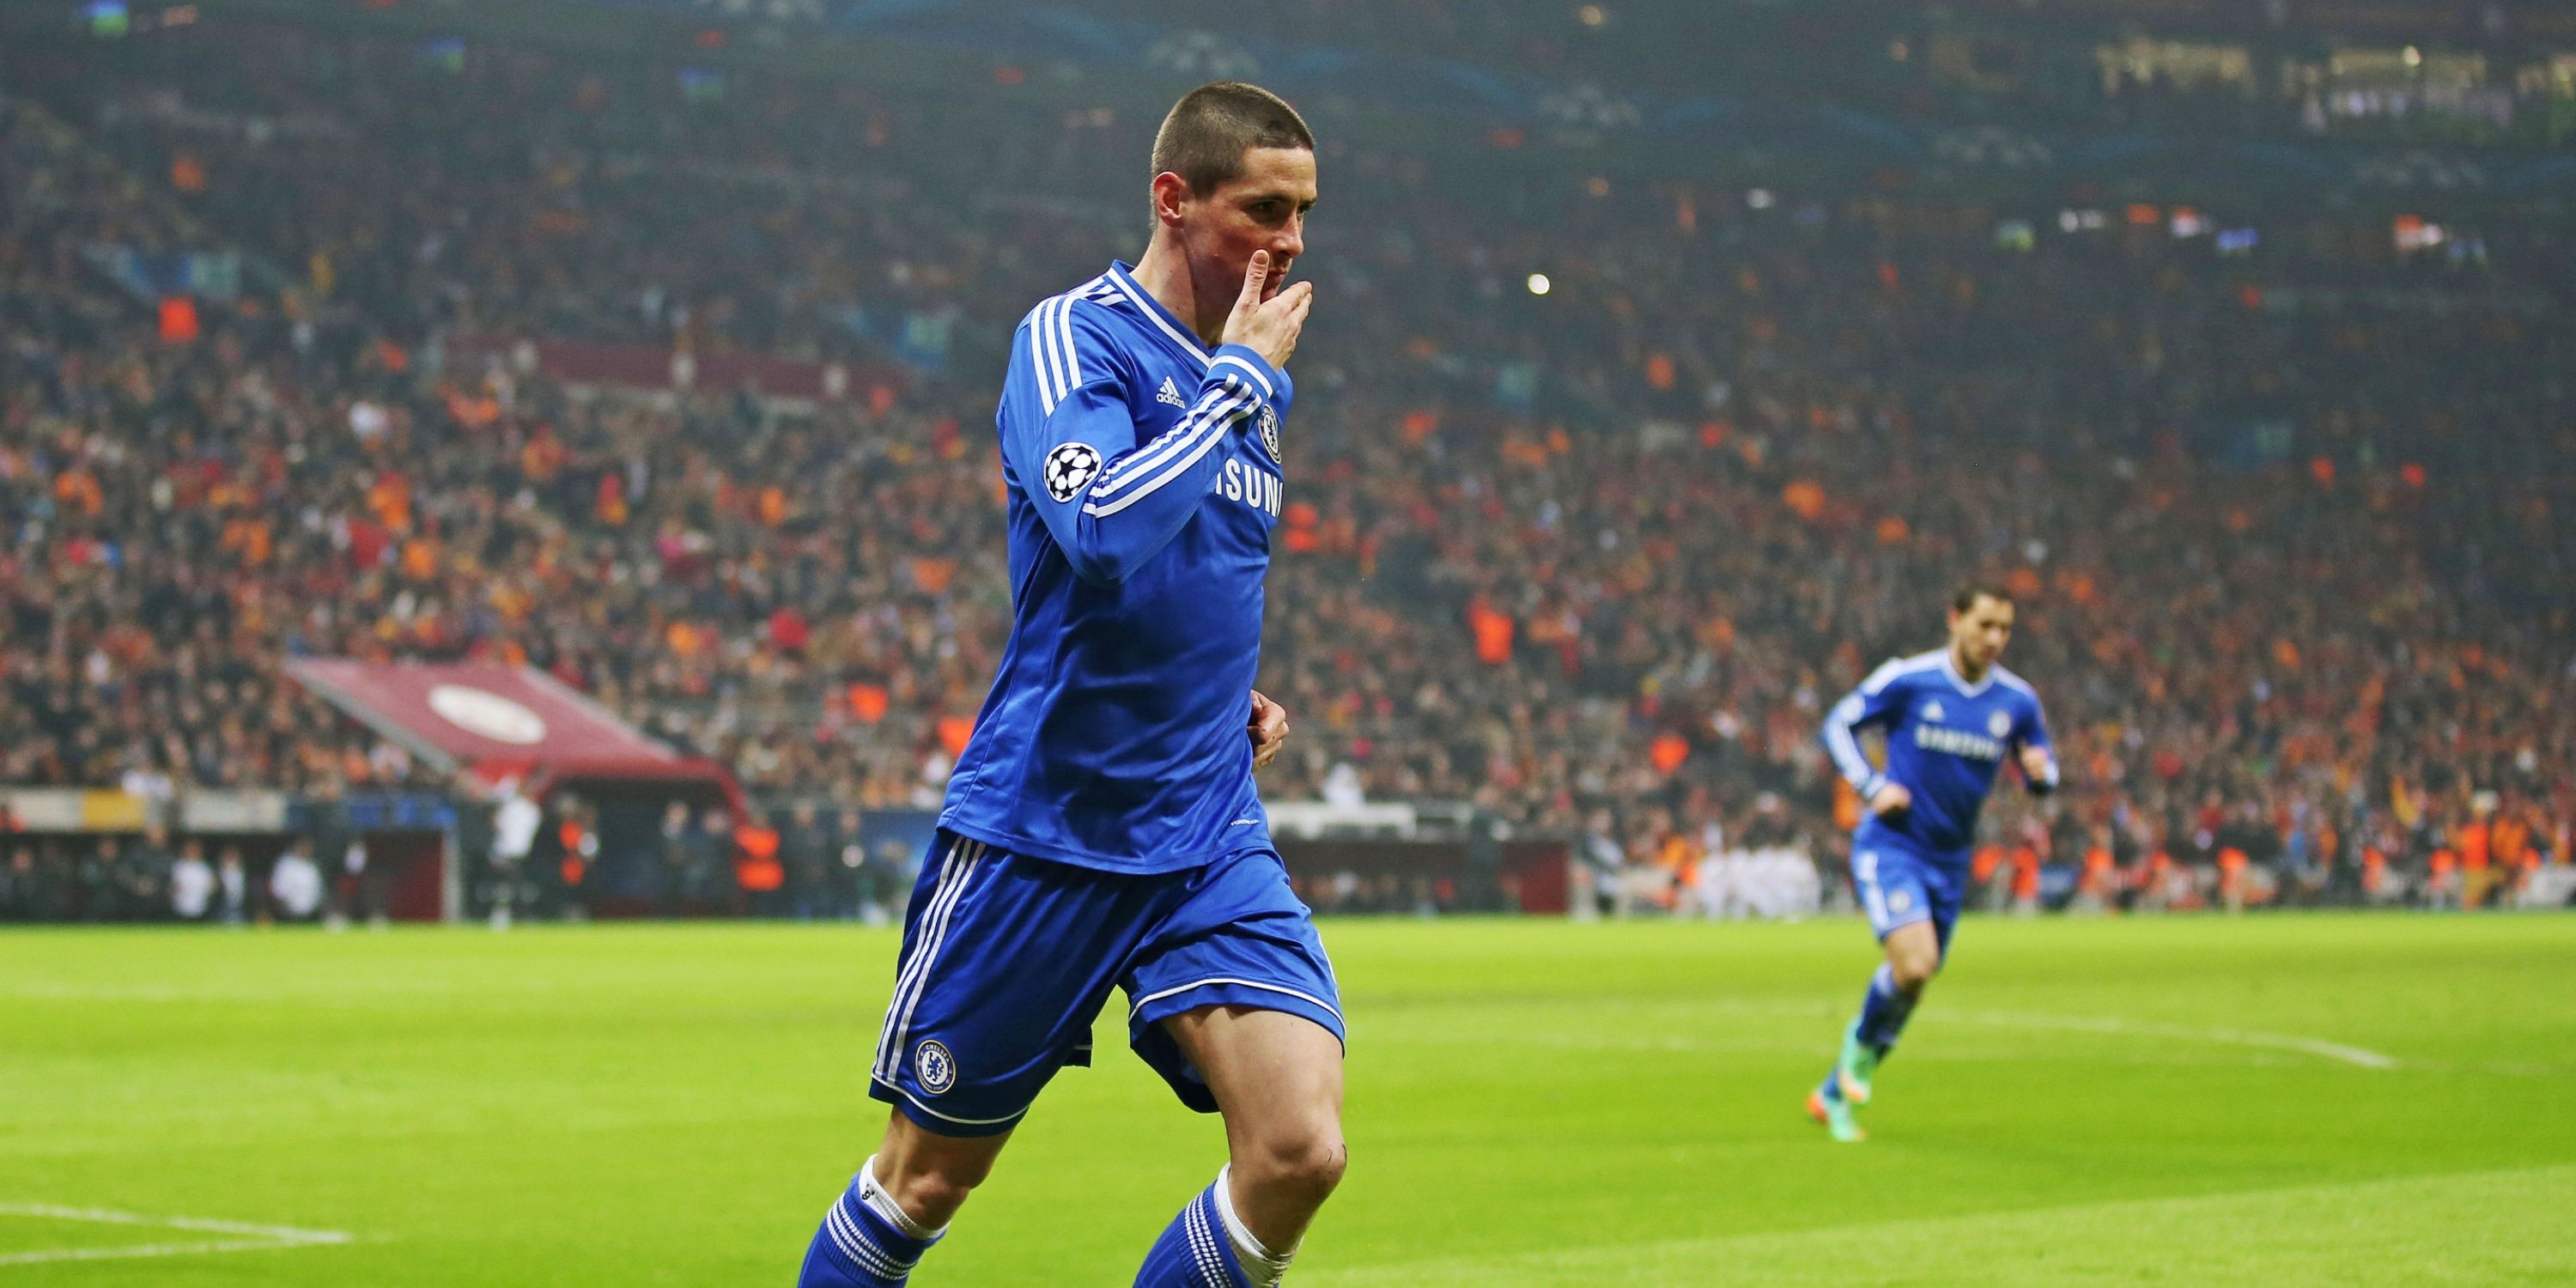 Former Chelsea striker Fernando Torres